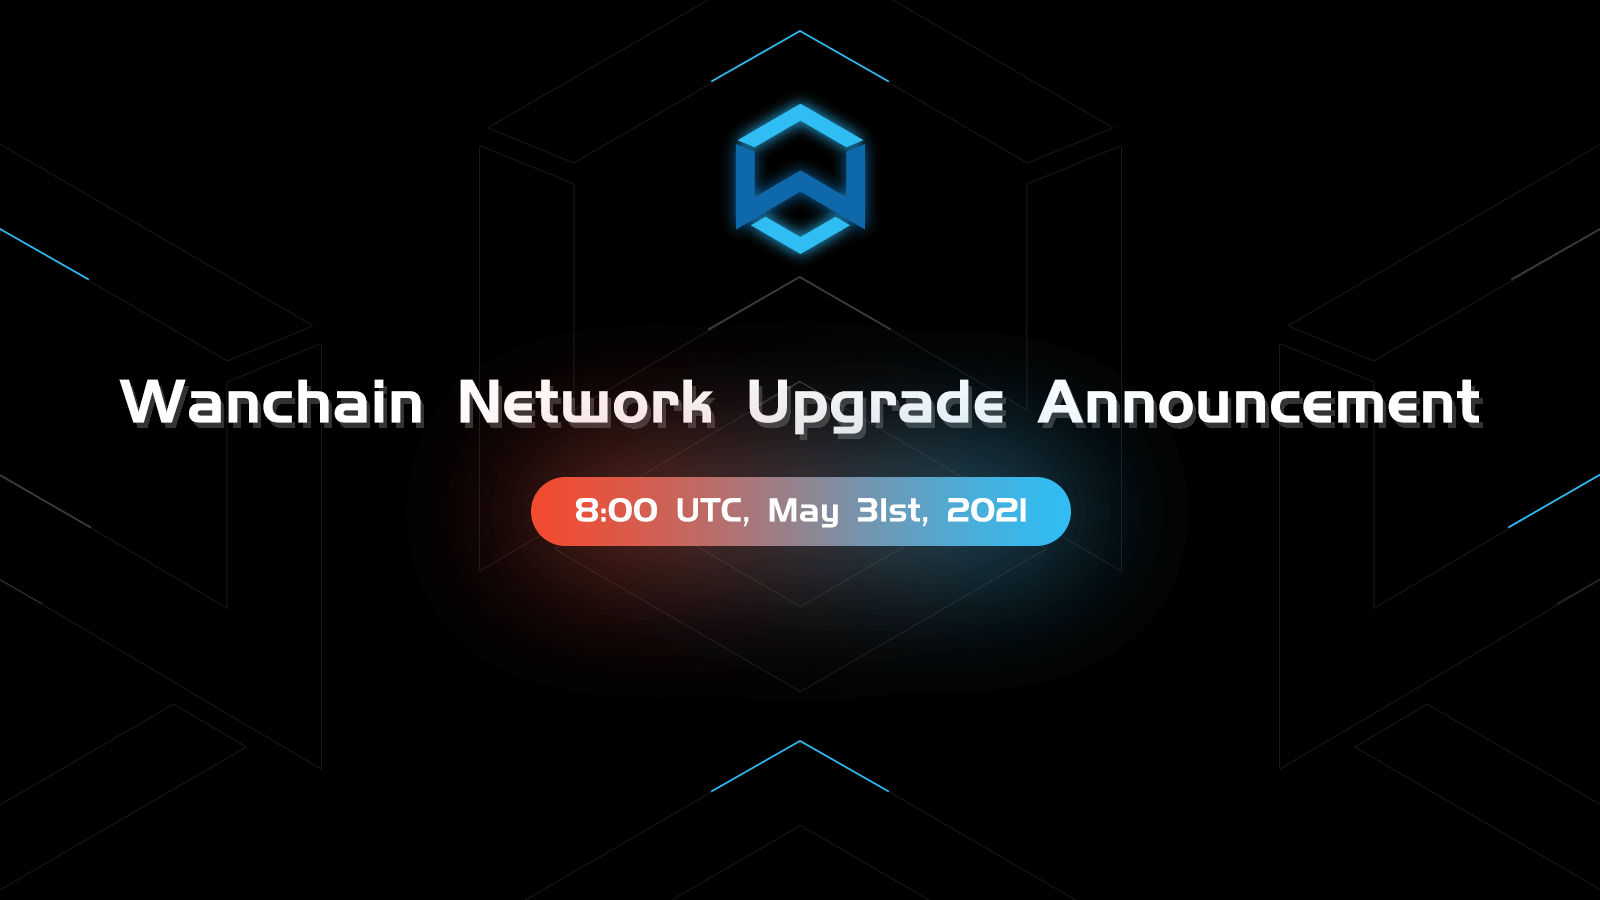 Wanchain Network Upgrade